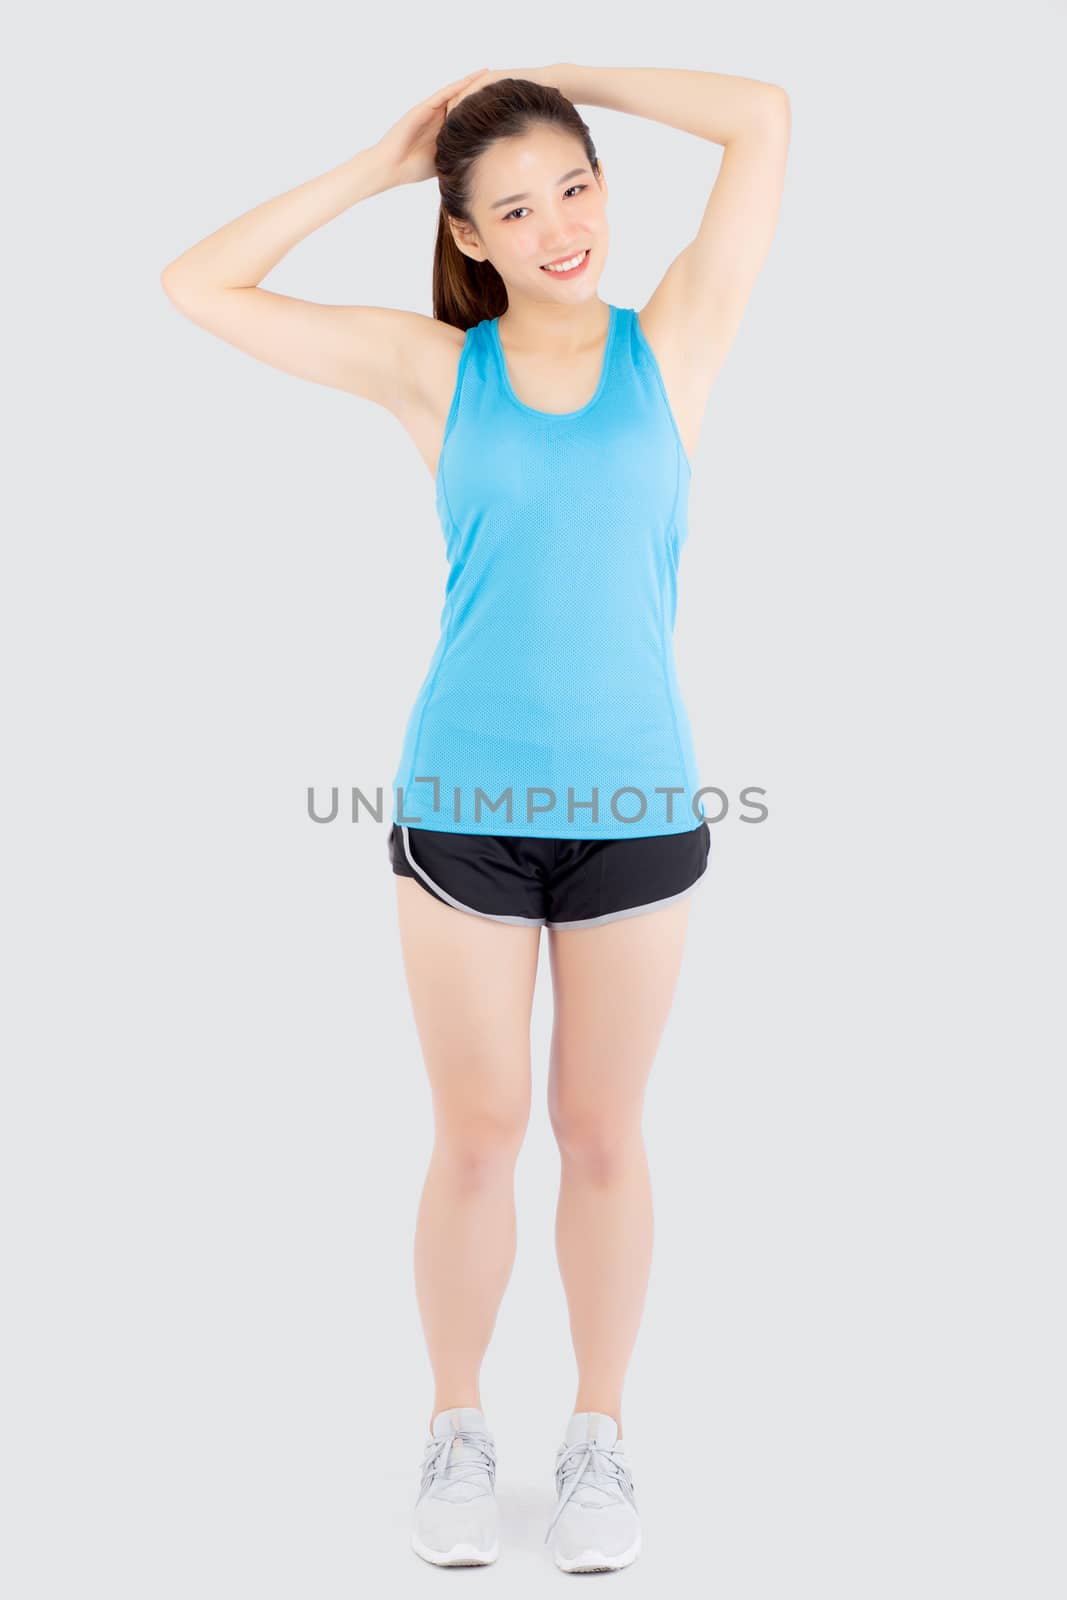 Beautiful portrait young asian woman standing workout stretch mu by nnudoo